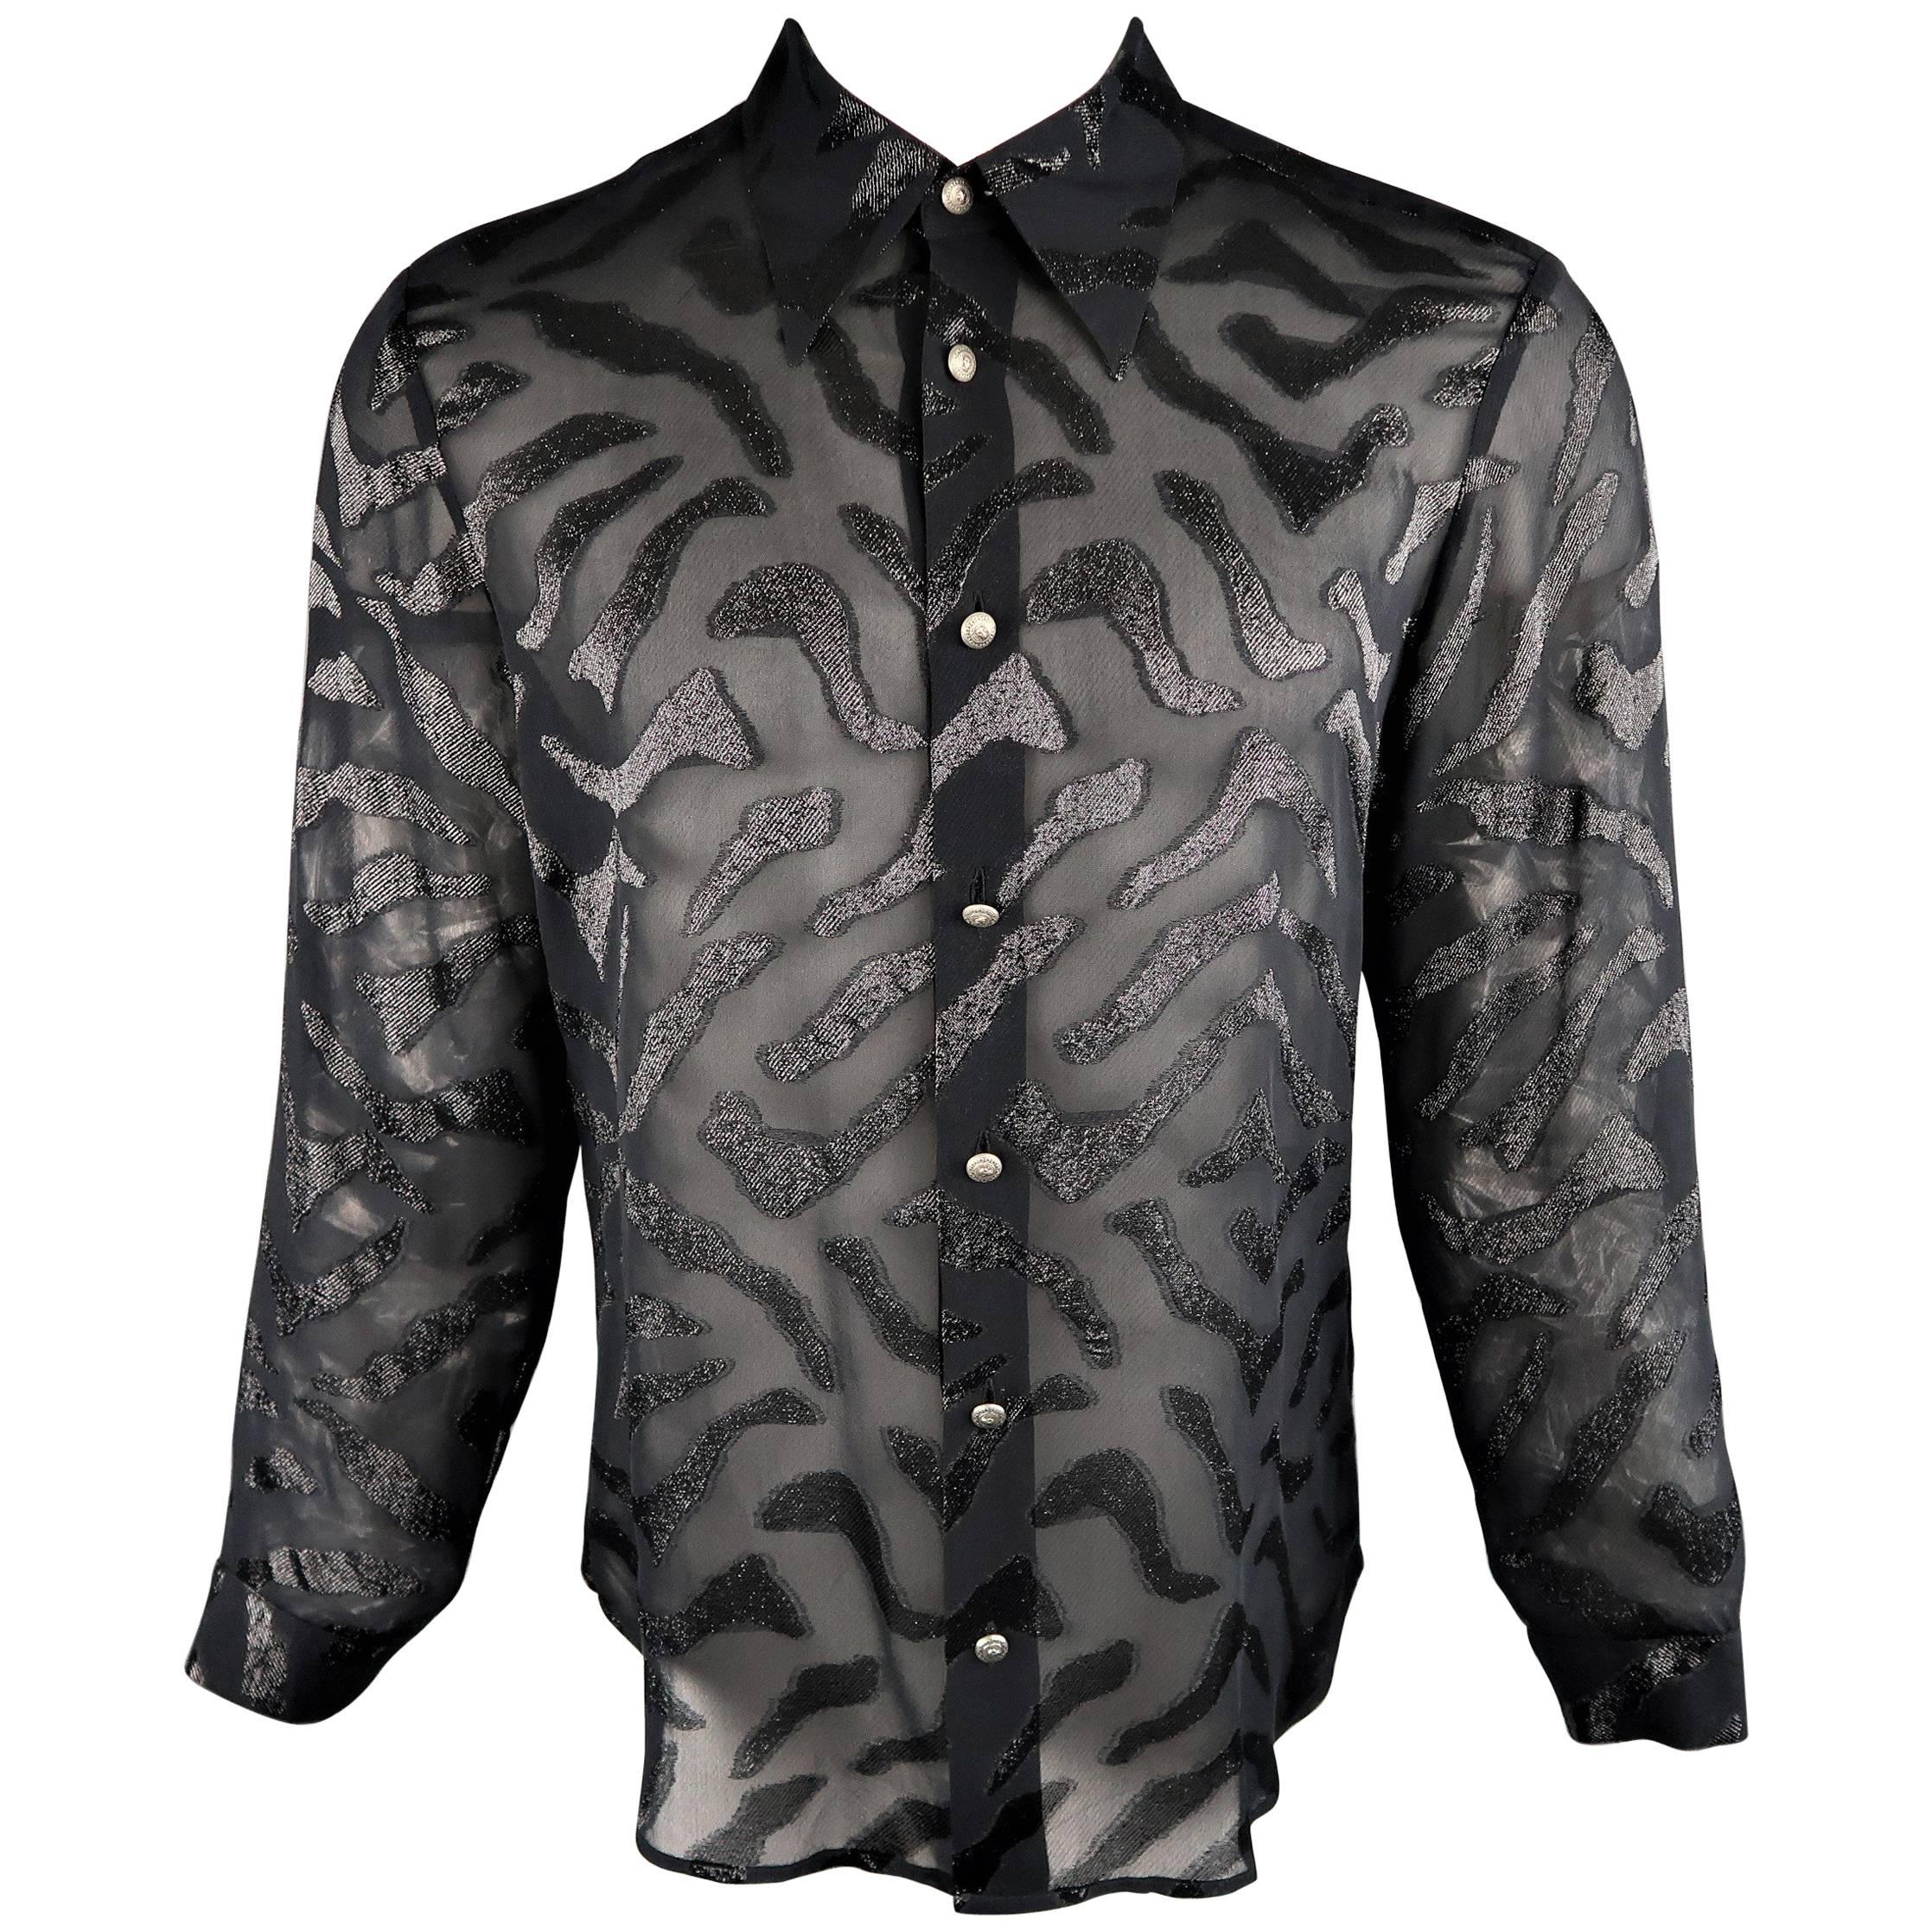 Men's VERSUS by GIANNI VERSACE Size S Black Tiger Print Silk Blend Burnout Shirt